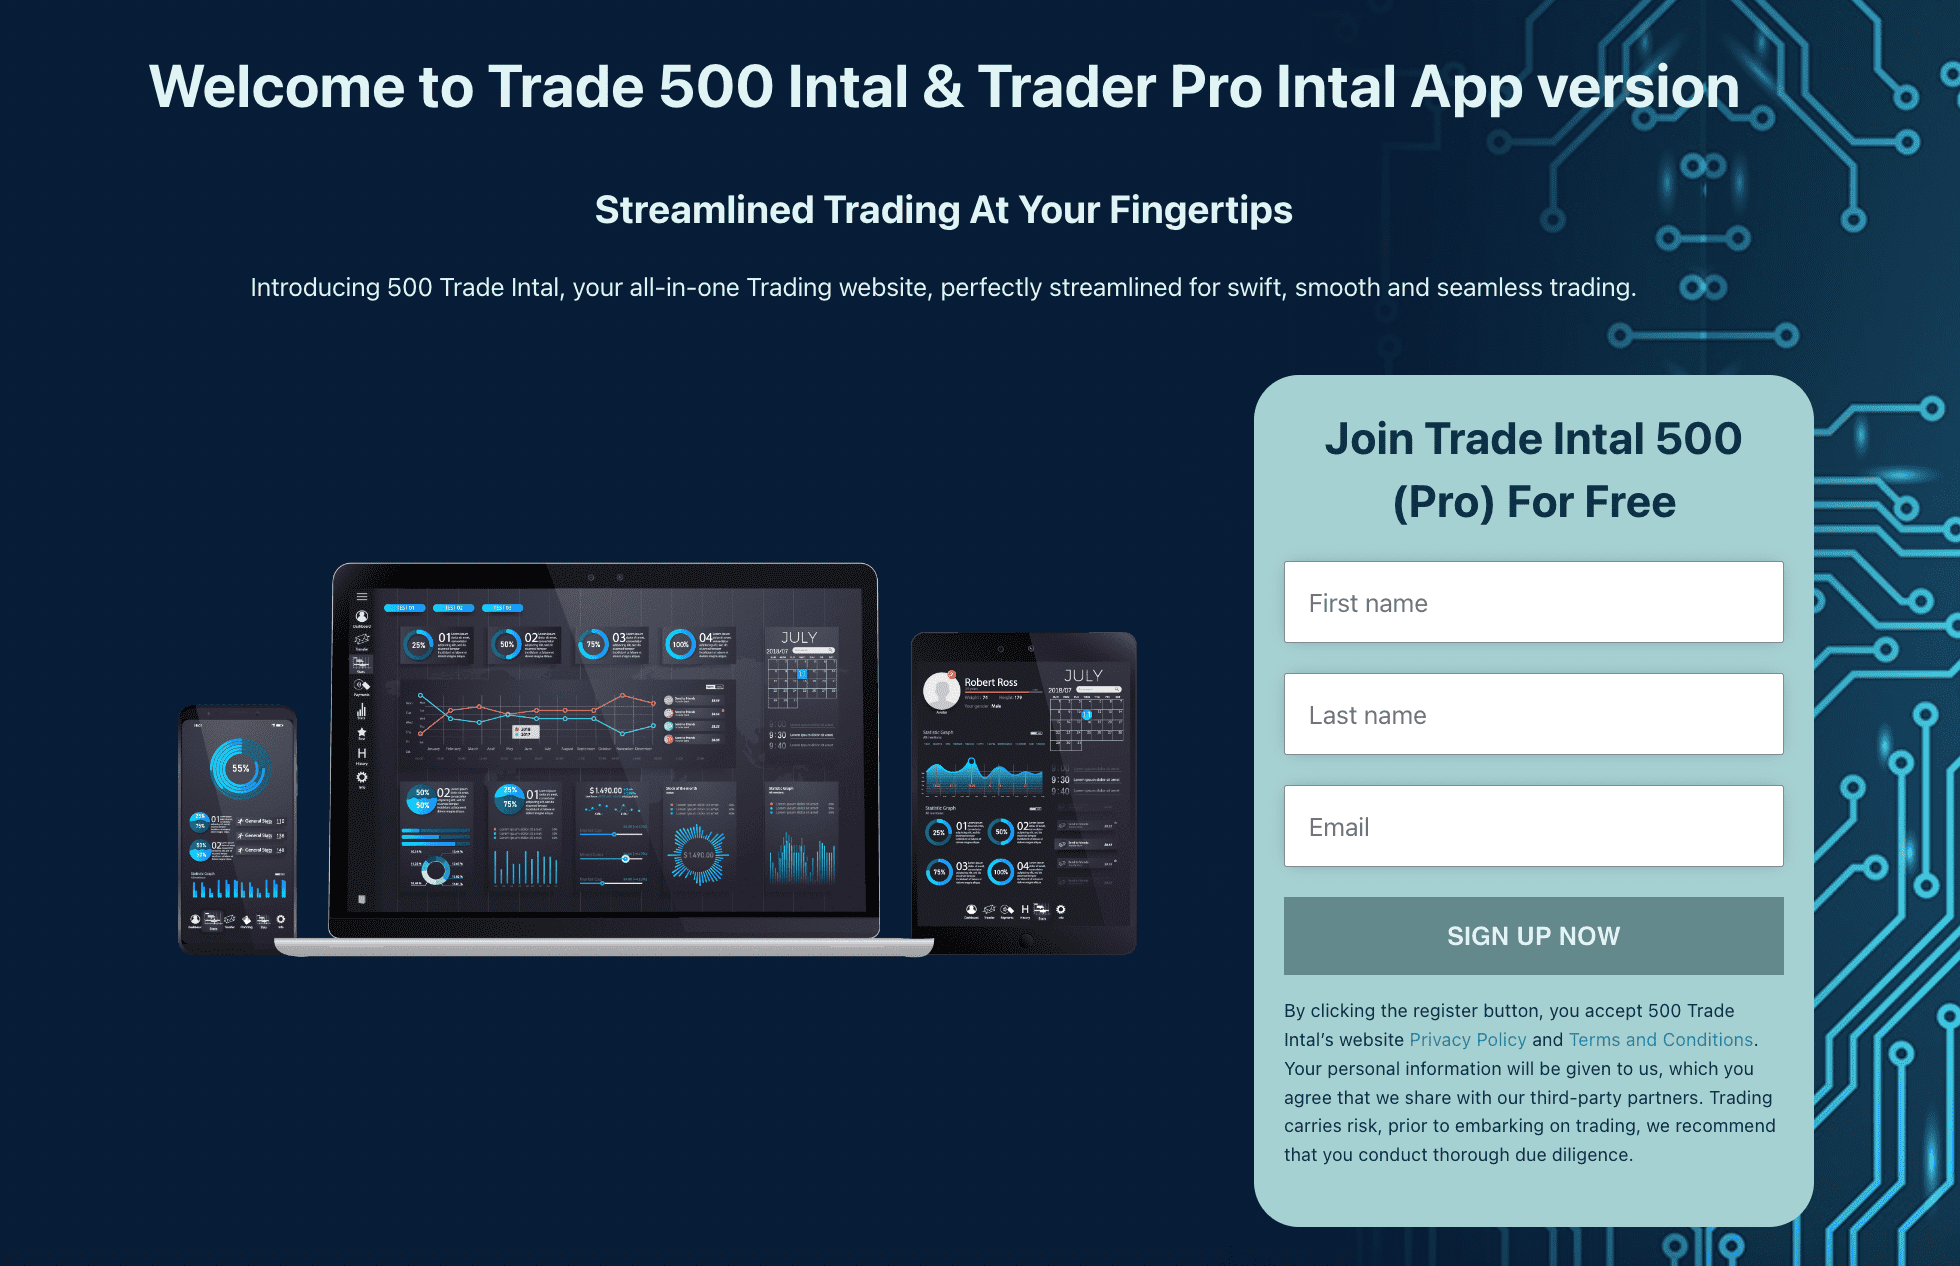 Trade Intal 500 (Pro)